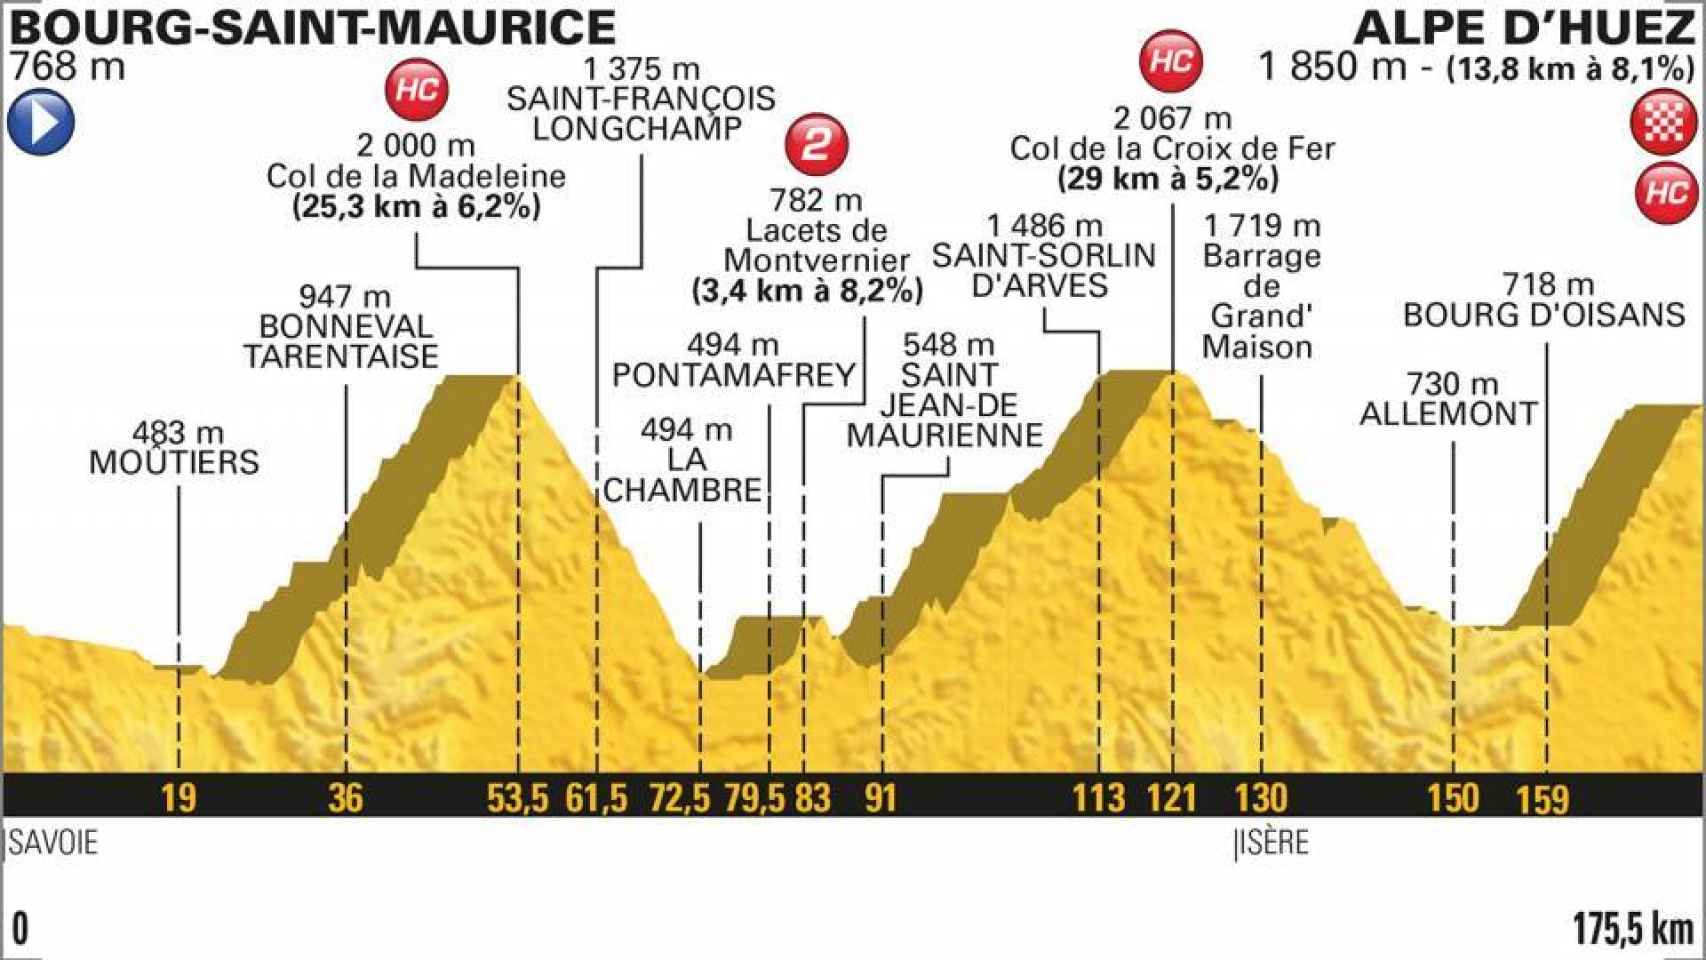 Bourg-Saint-Maurice / Alpe d'Huez (175,5 km).